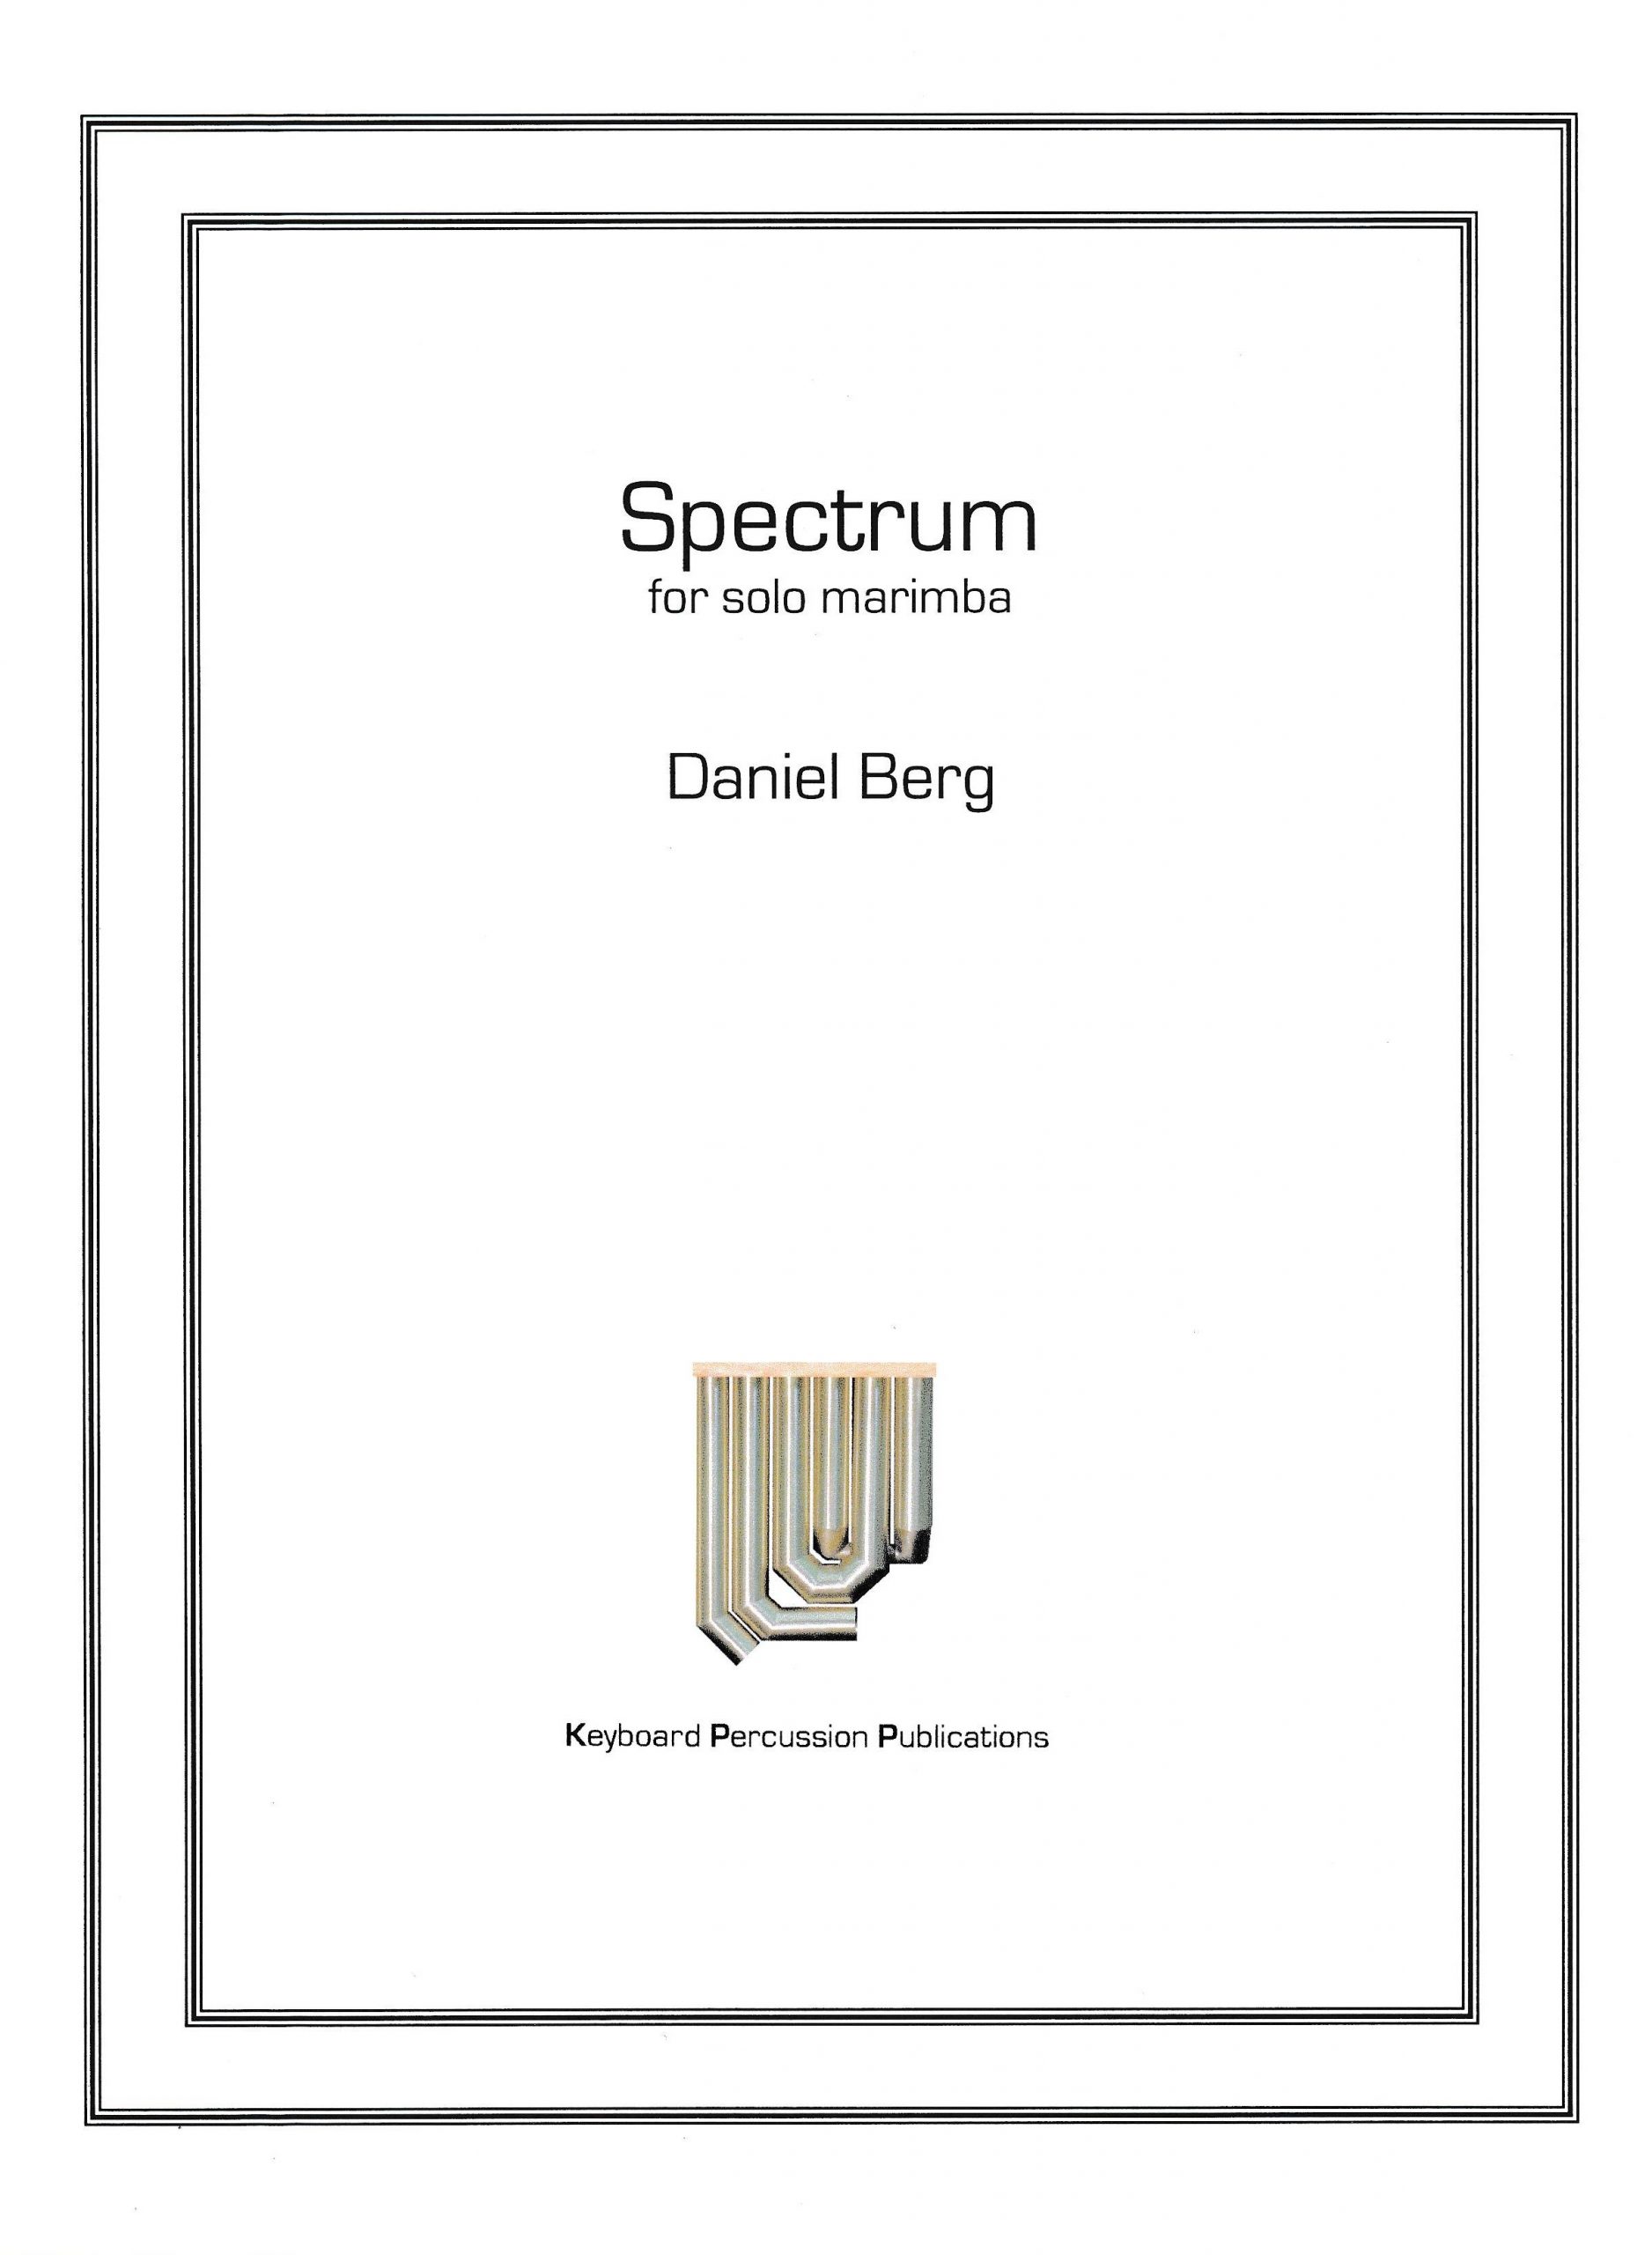 Spectrum by Daniel Berg